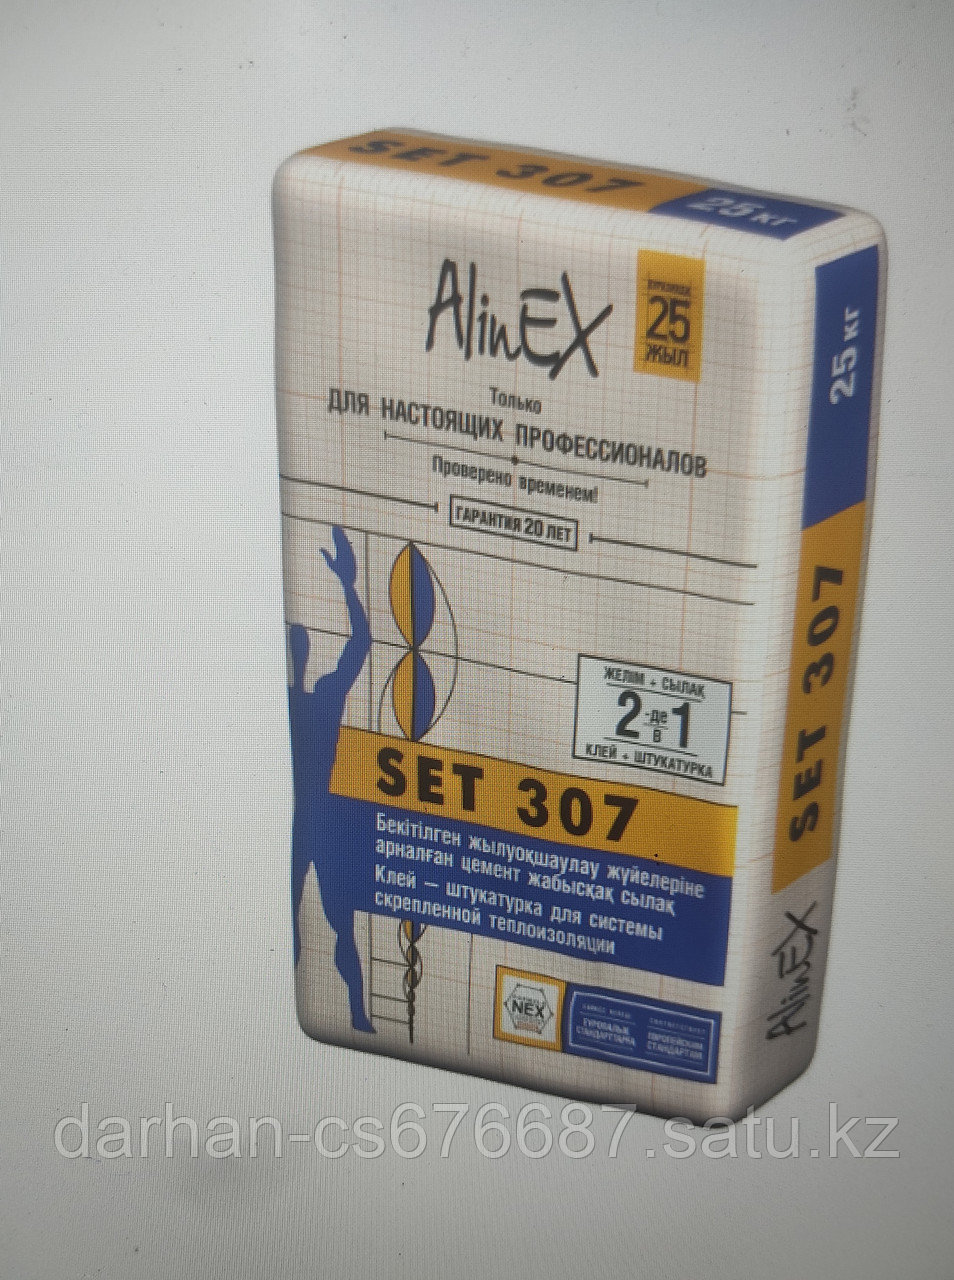 AlinEX «SET 307», 25 кг